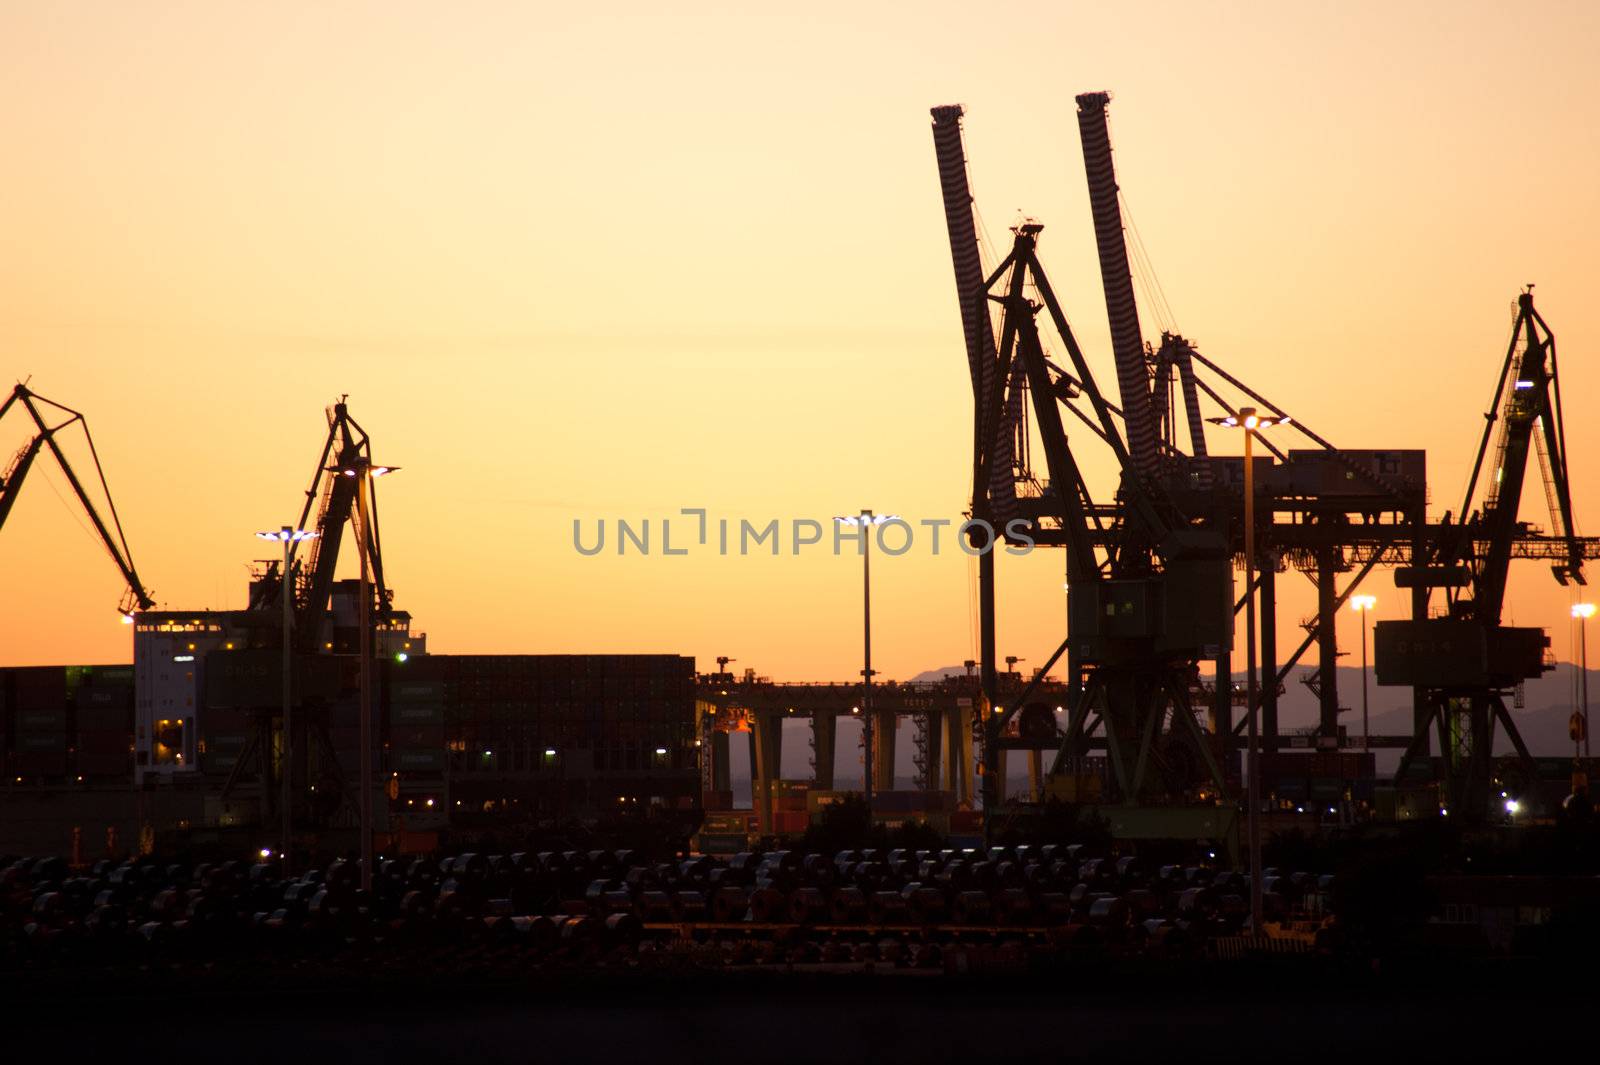 cranes on the quay in the Taranto port